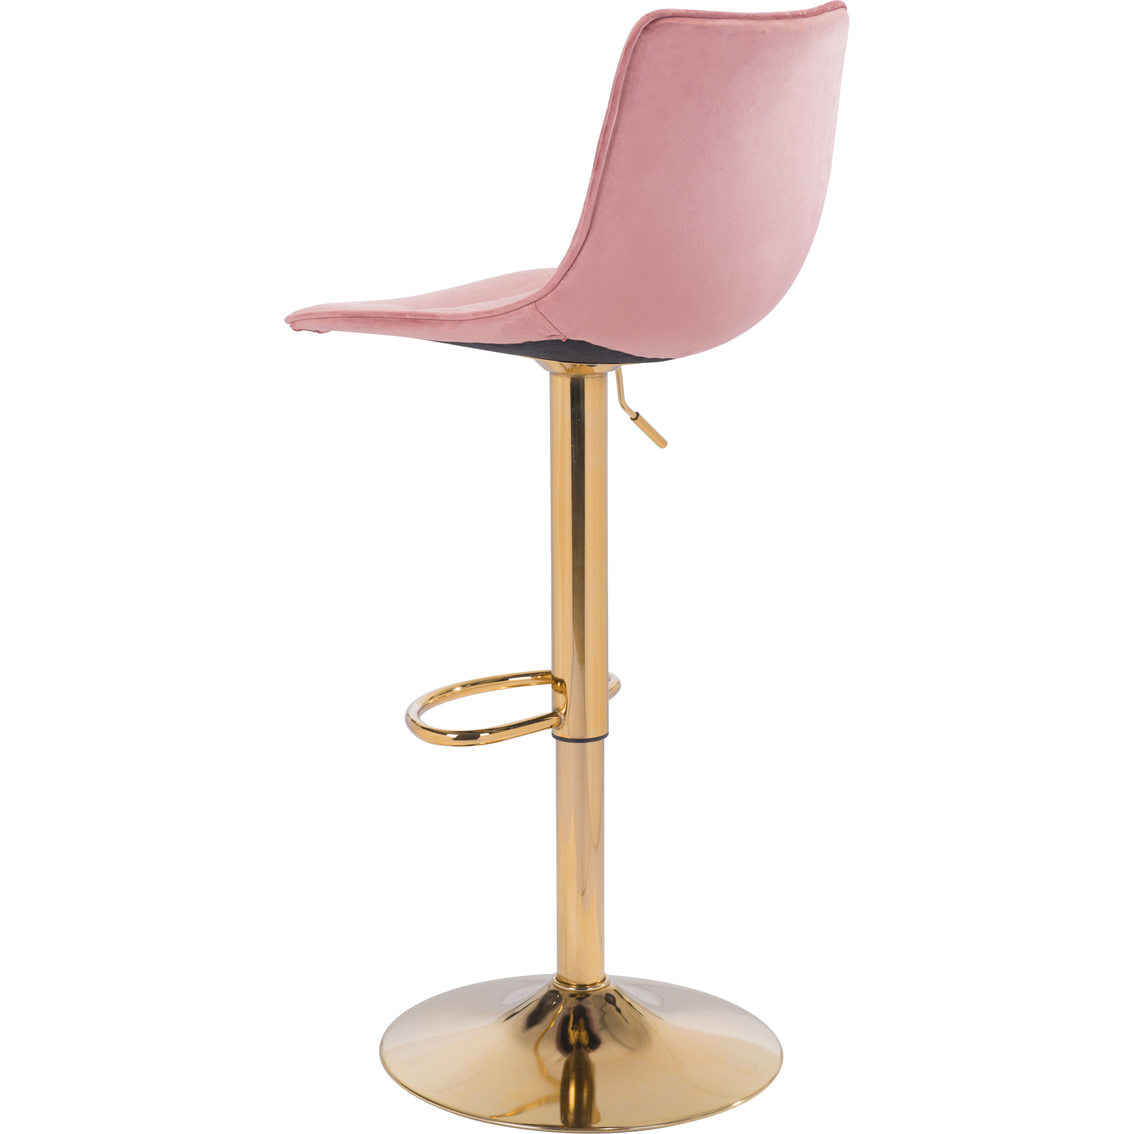 Zuo Modern Prima Bar Chair - Image 5 of 10